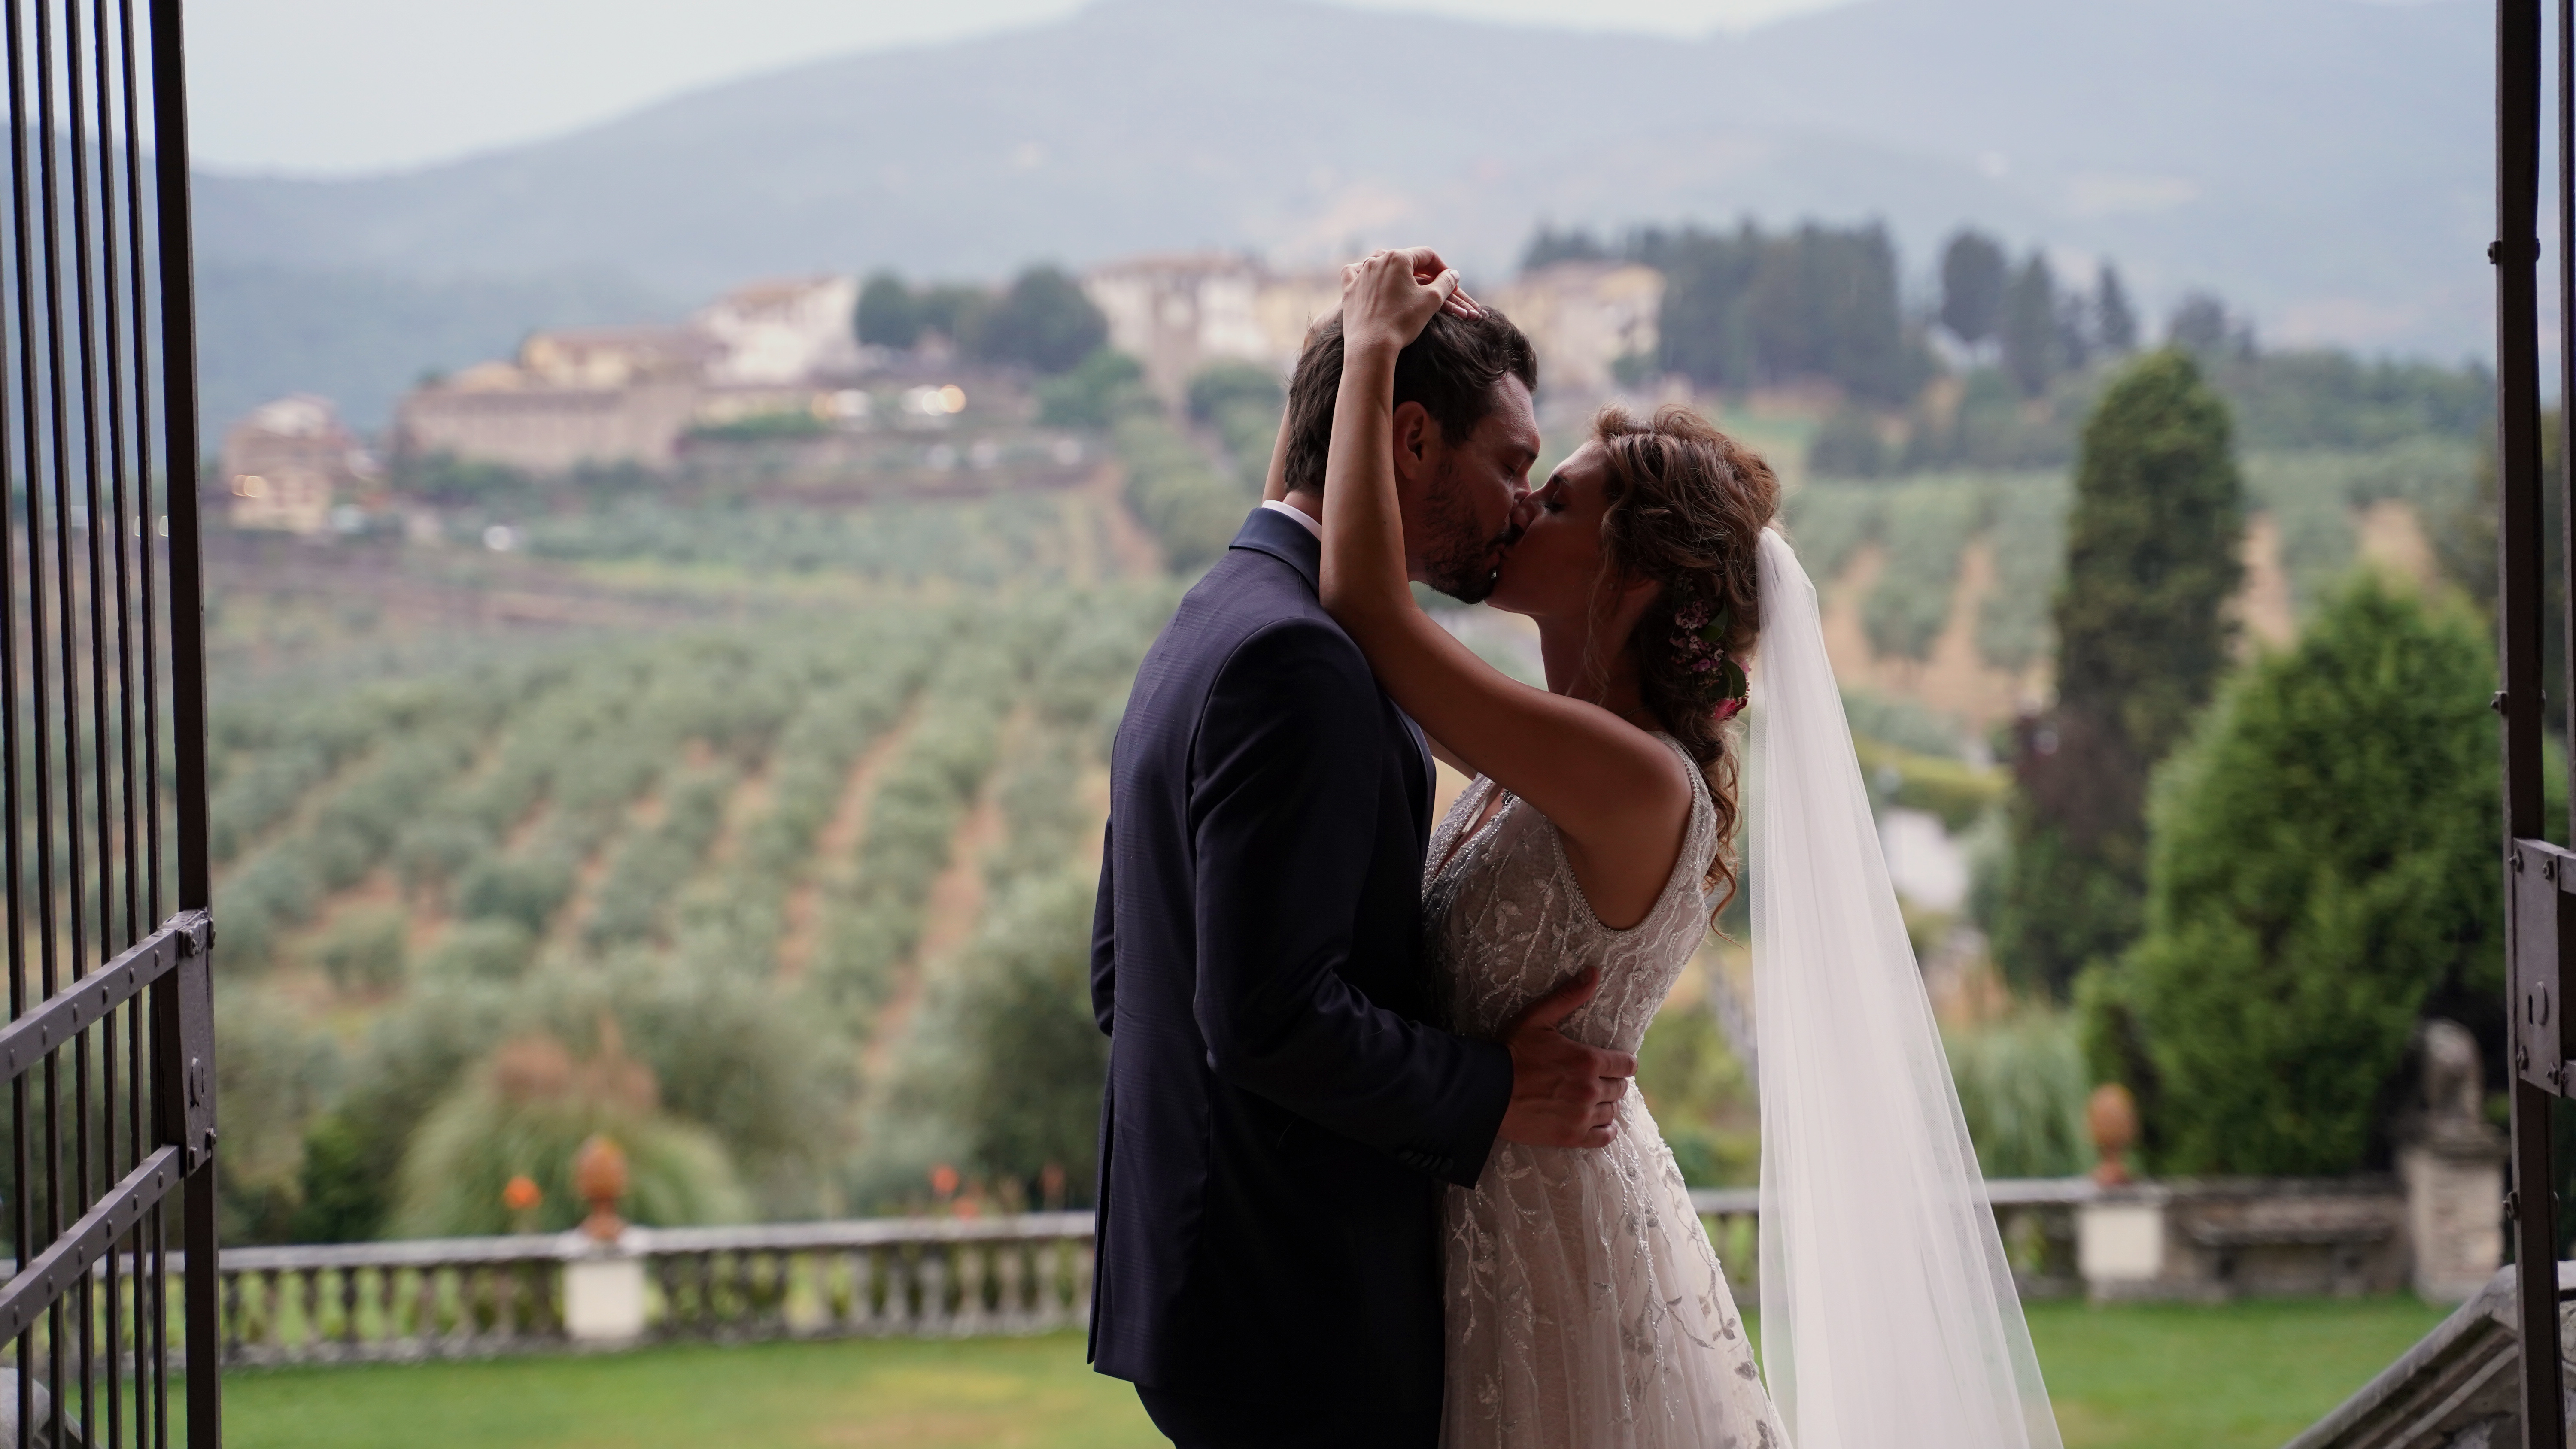 TThe Cinematic wedding trailer Sara & Jacopo